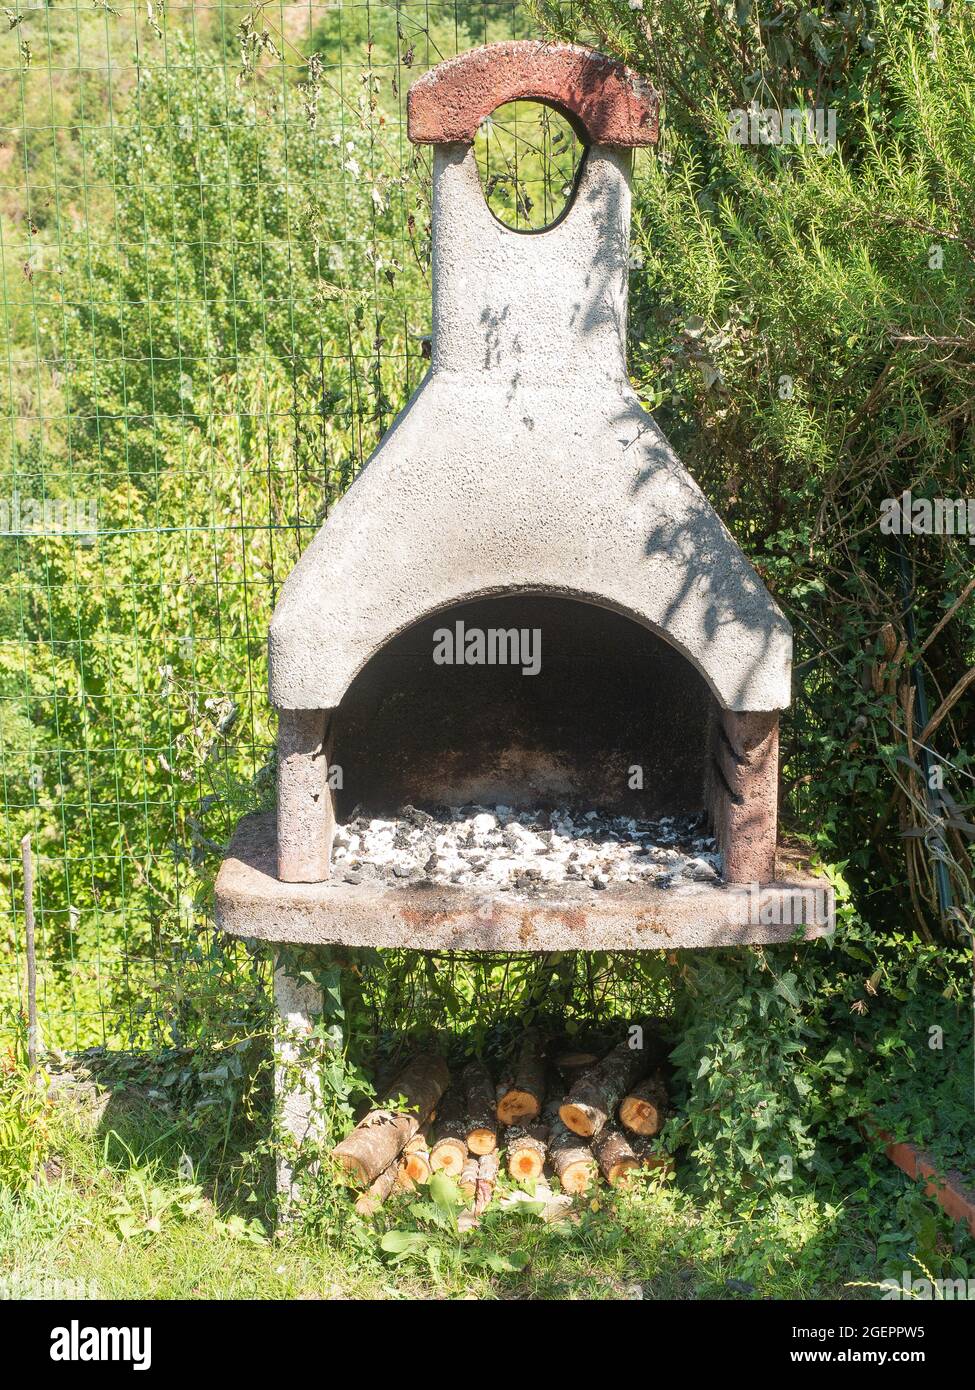 Barbacoa de hormigón refractario de mampostería equipada para quemar madera y carbón rodeado de vegetación Foto de stock